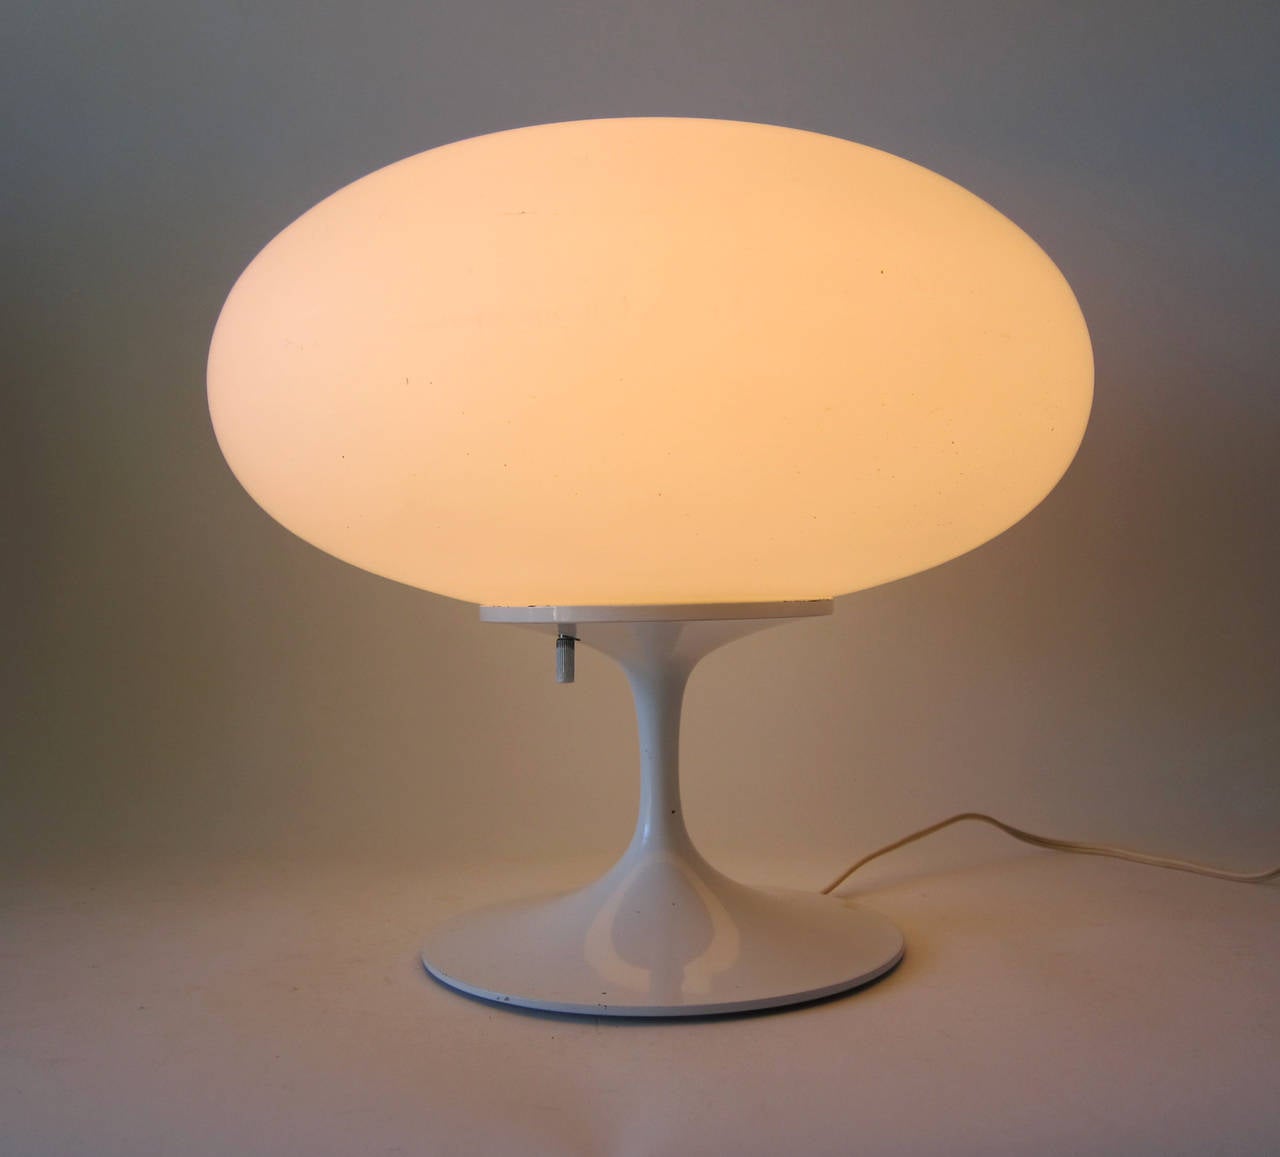 Bill Curry for Design Line stemlite lamp made in El Segundo California, circa 1960s. Lamp measures 12